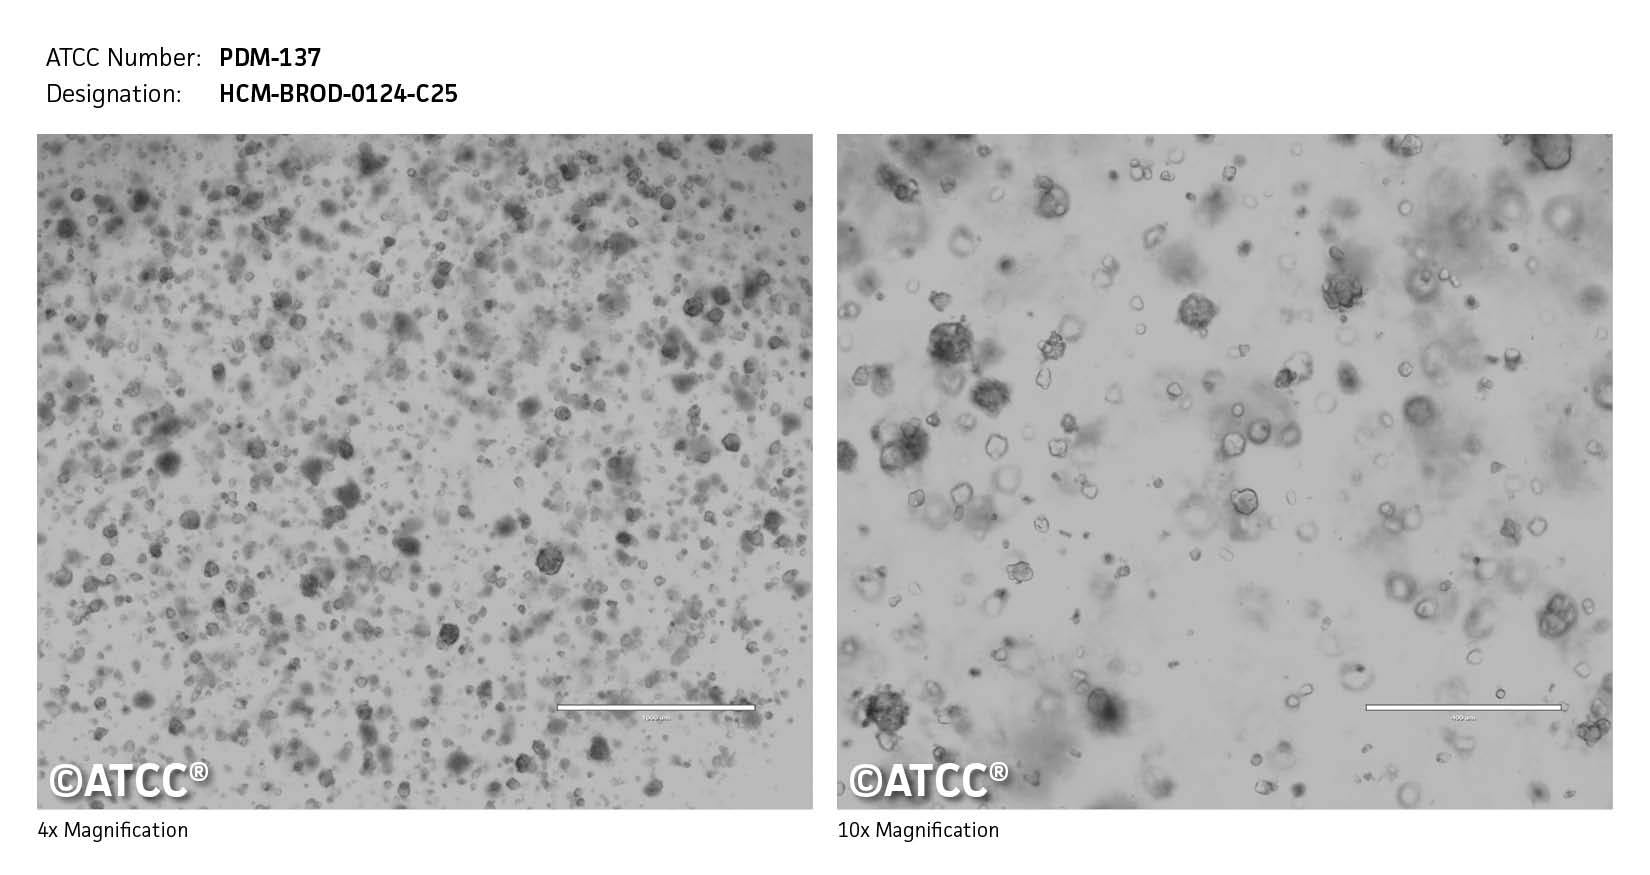 ATCC PDM-137 Cell Micrograph